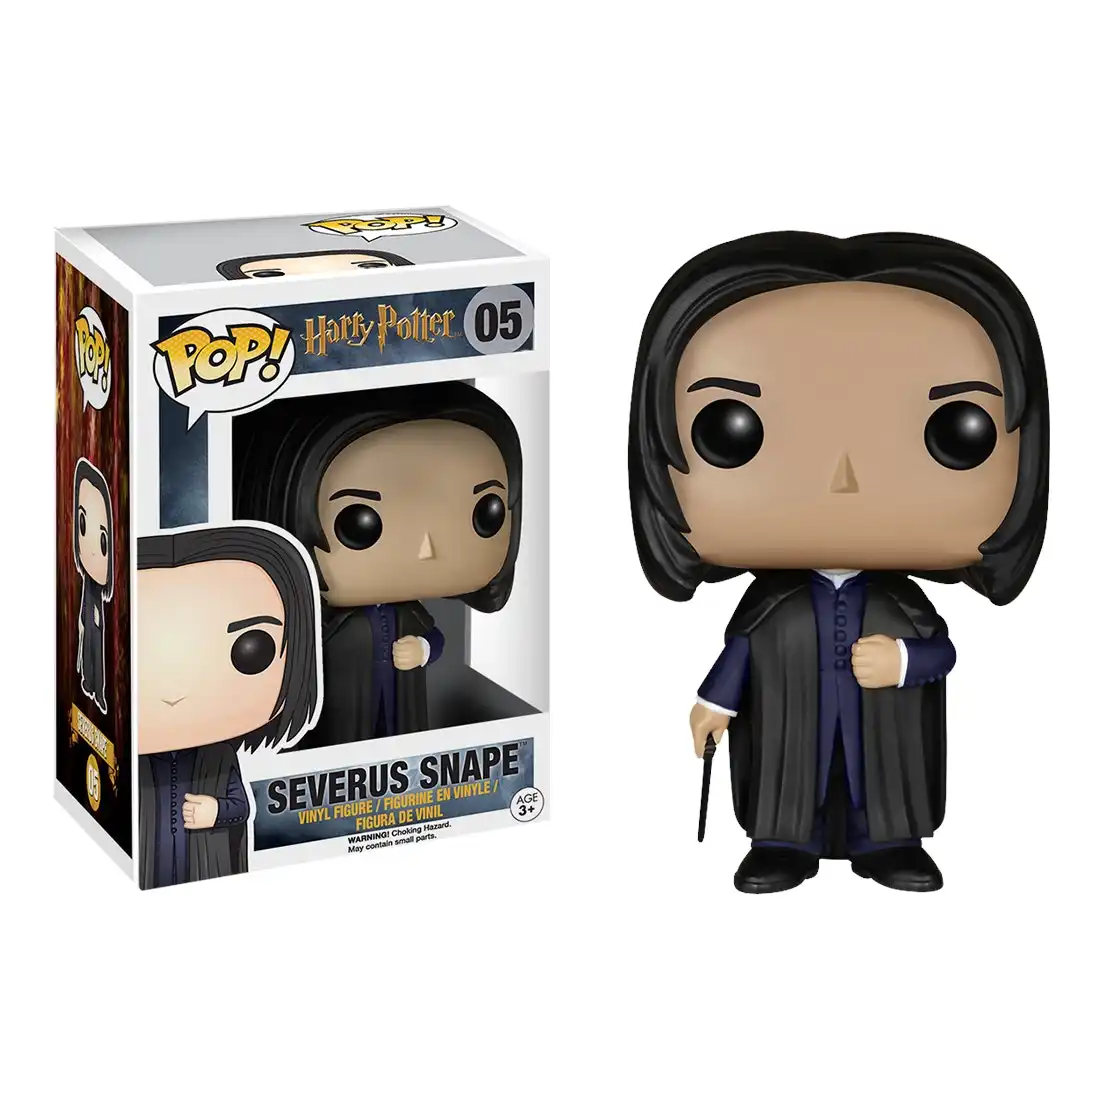 Harry Potter - Severus Snape Pop! Vinyl Figure